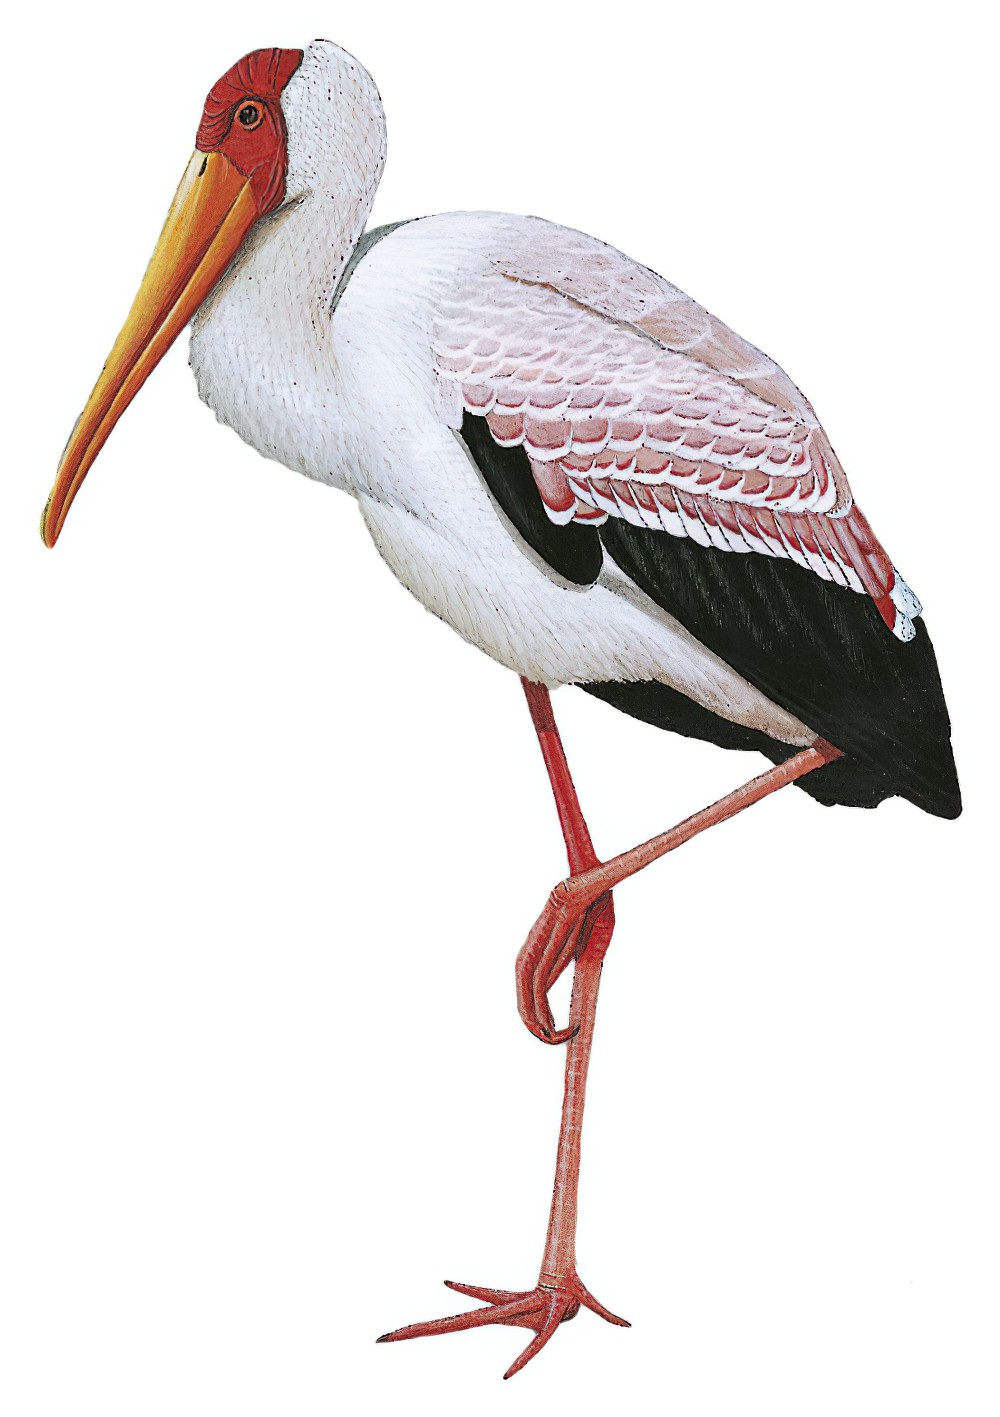 Yellow-billed Stork / Mycteria ibis